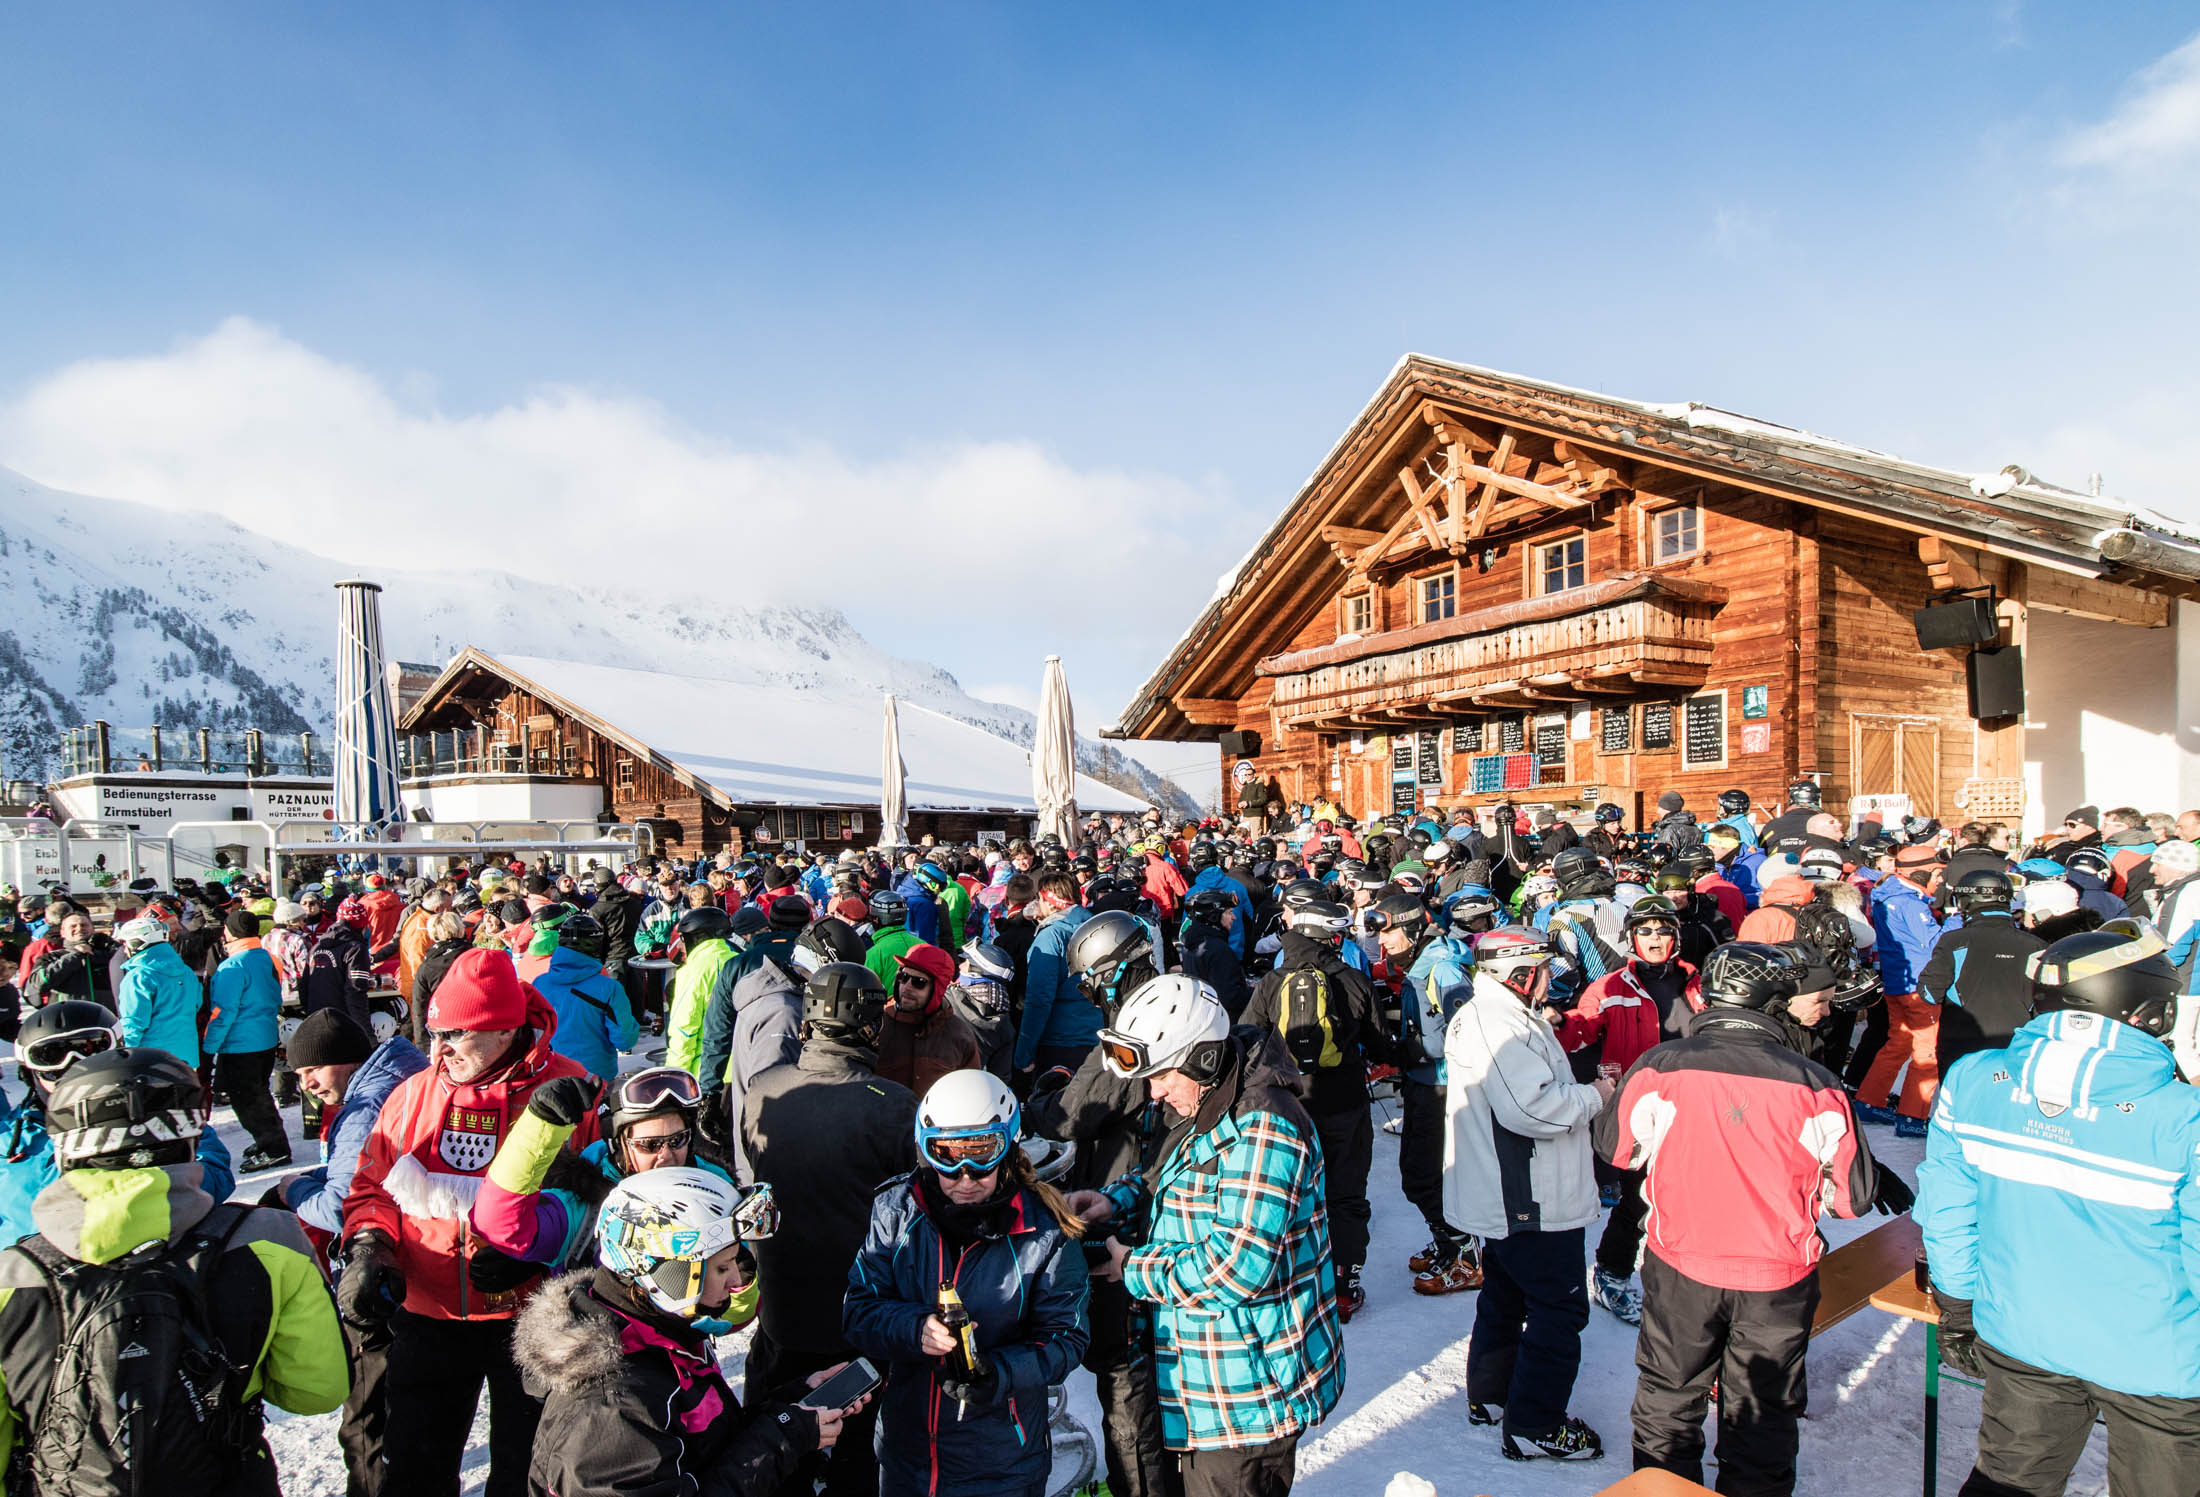 Apres ski, The Best Apres Ski Resorts